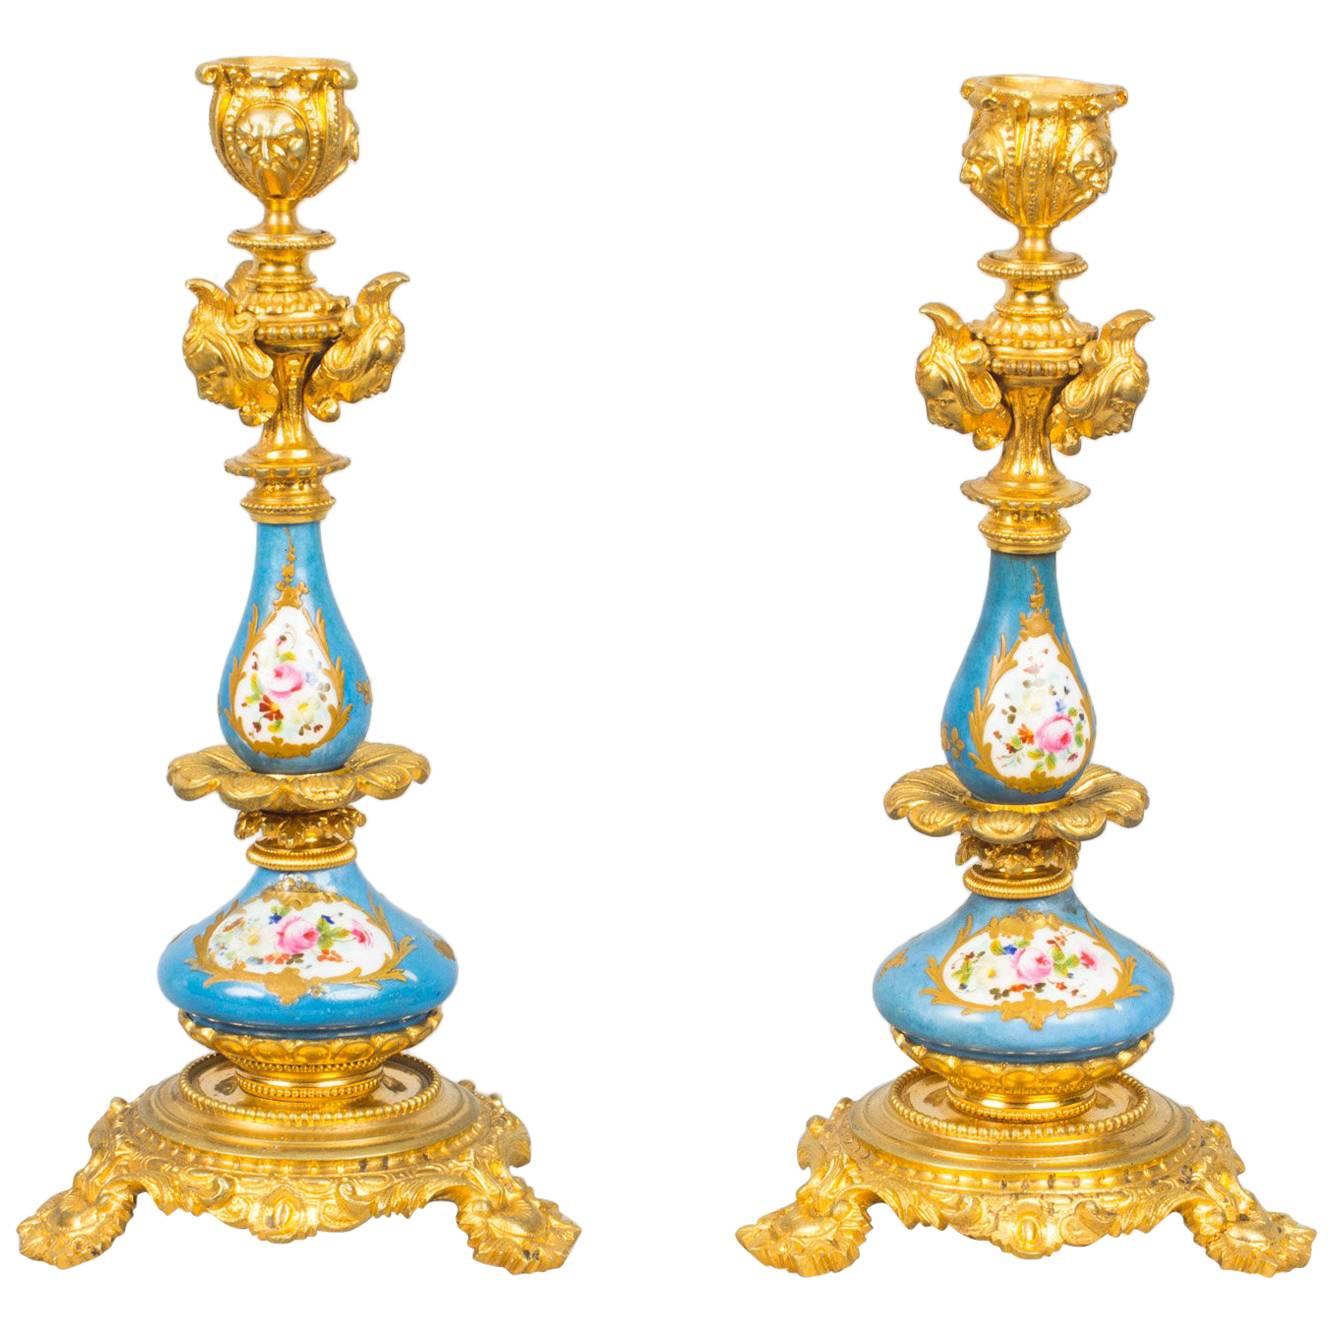 Antique Pair of Sèvres Porcelain Ormolu Candlesticks, 19th Century